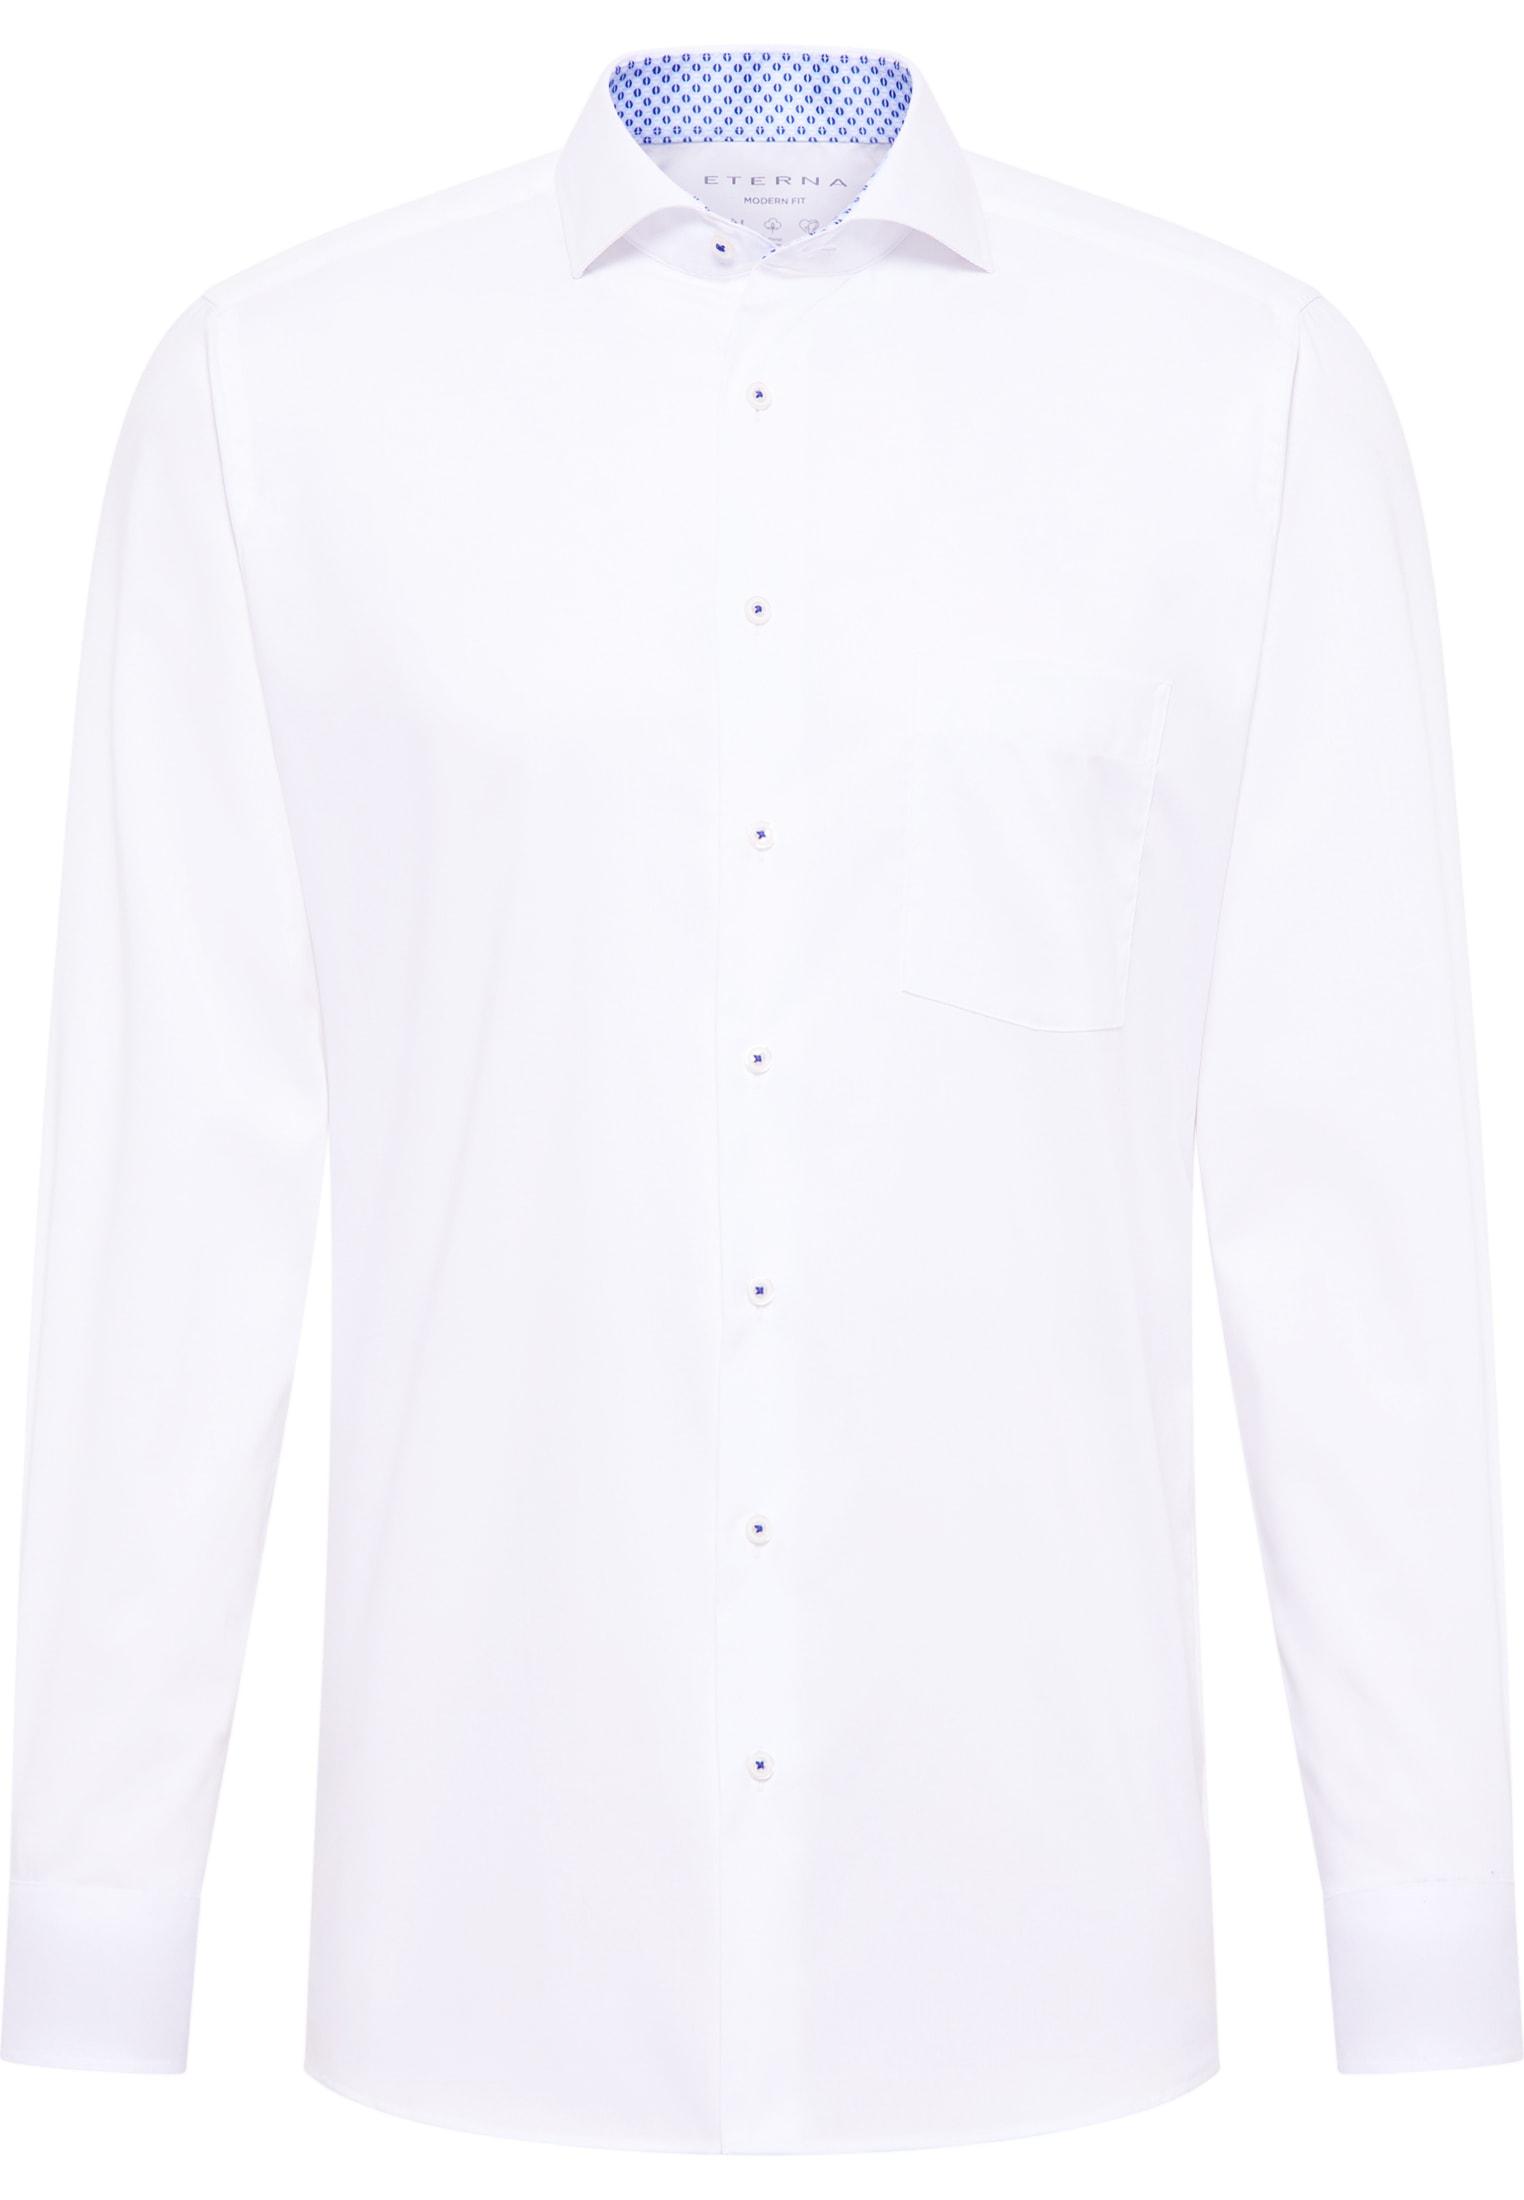 MODERN FIT Performance Shirt in weiß unifarben